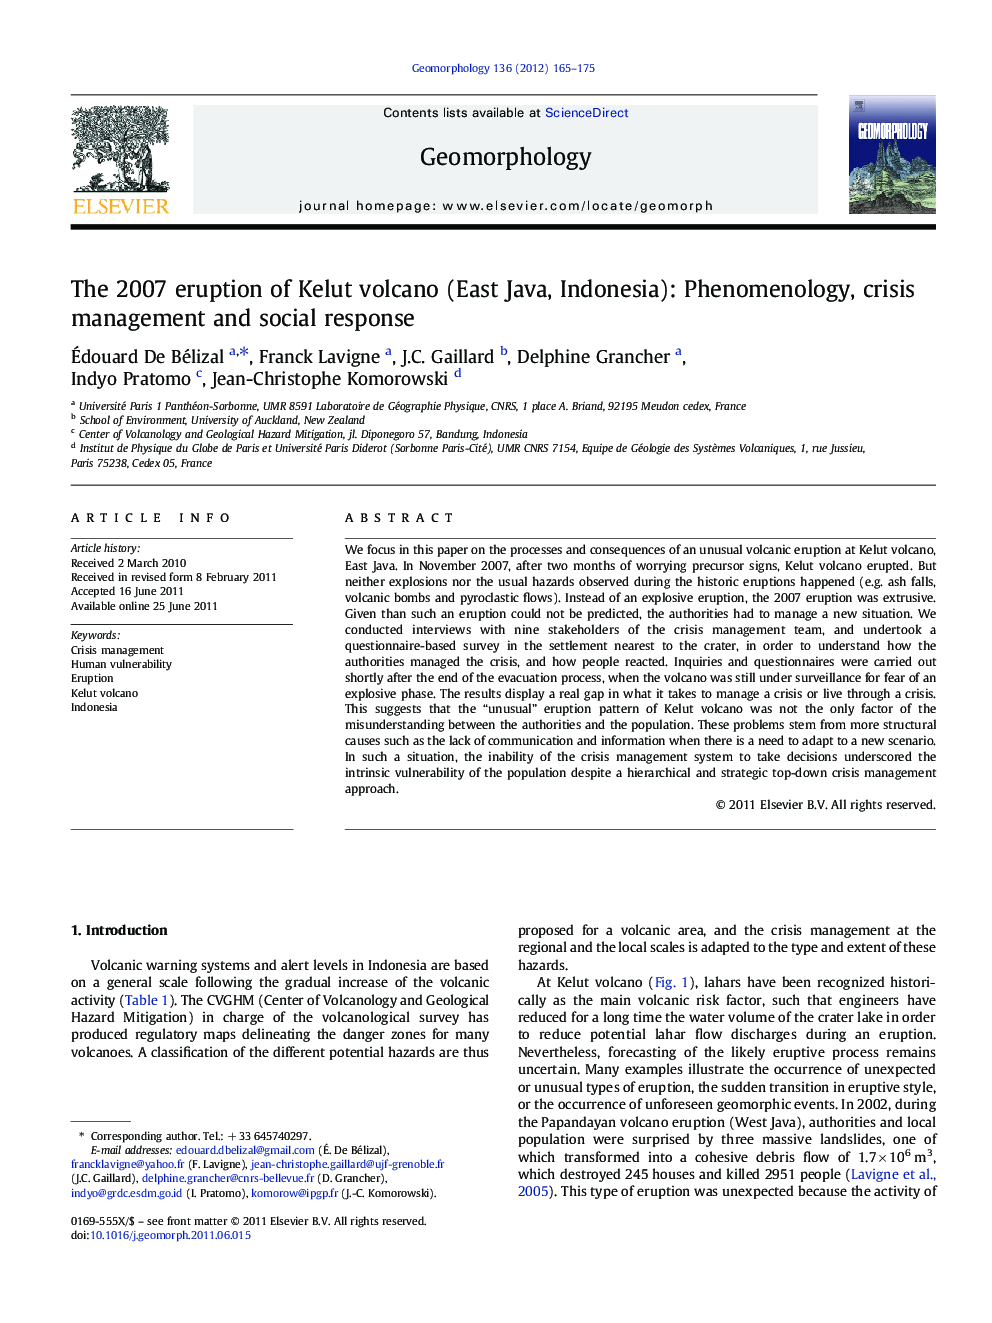 The 2007 eruption of Kelut volcano (East Java, Indonesia): Phenomenology, crisis management and social response